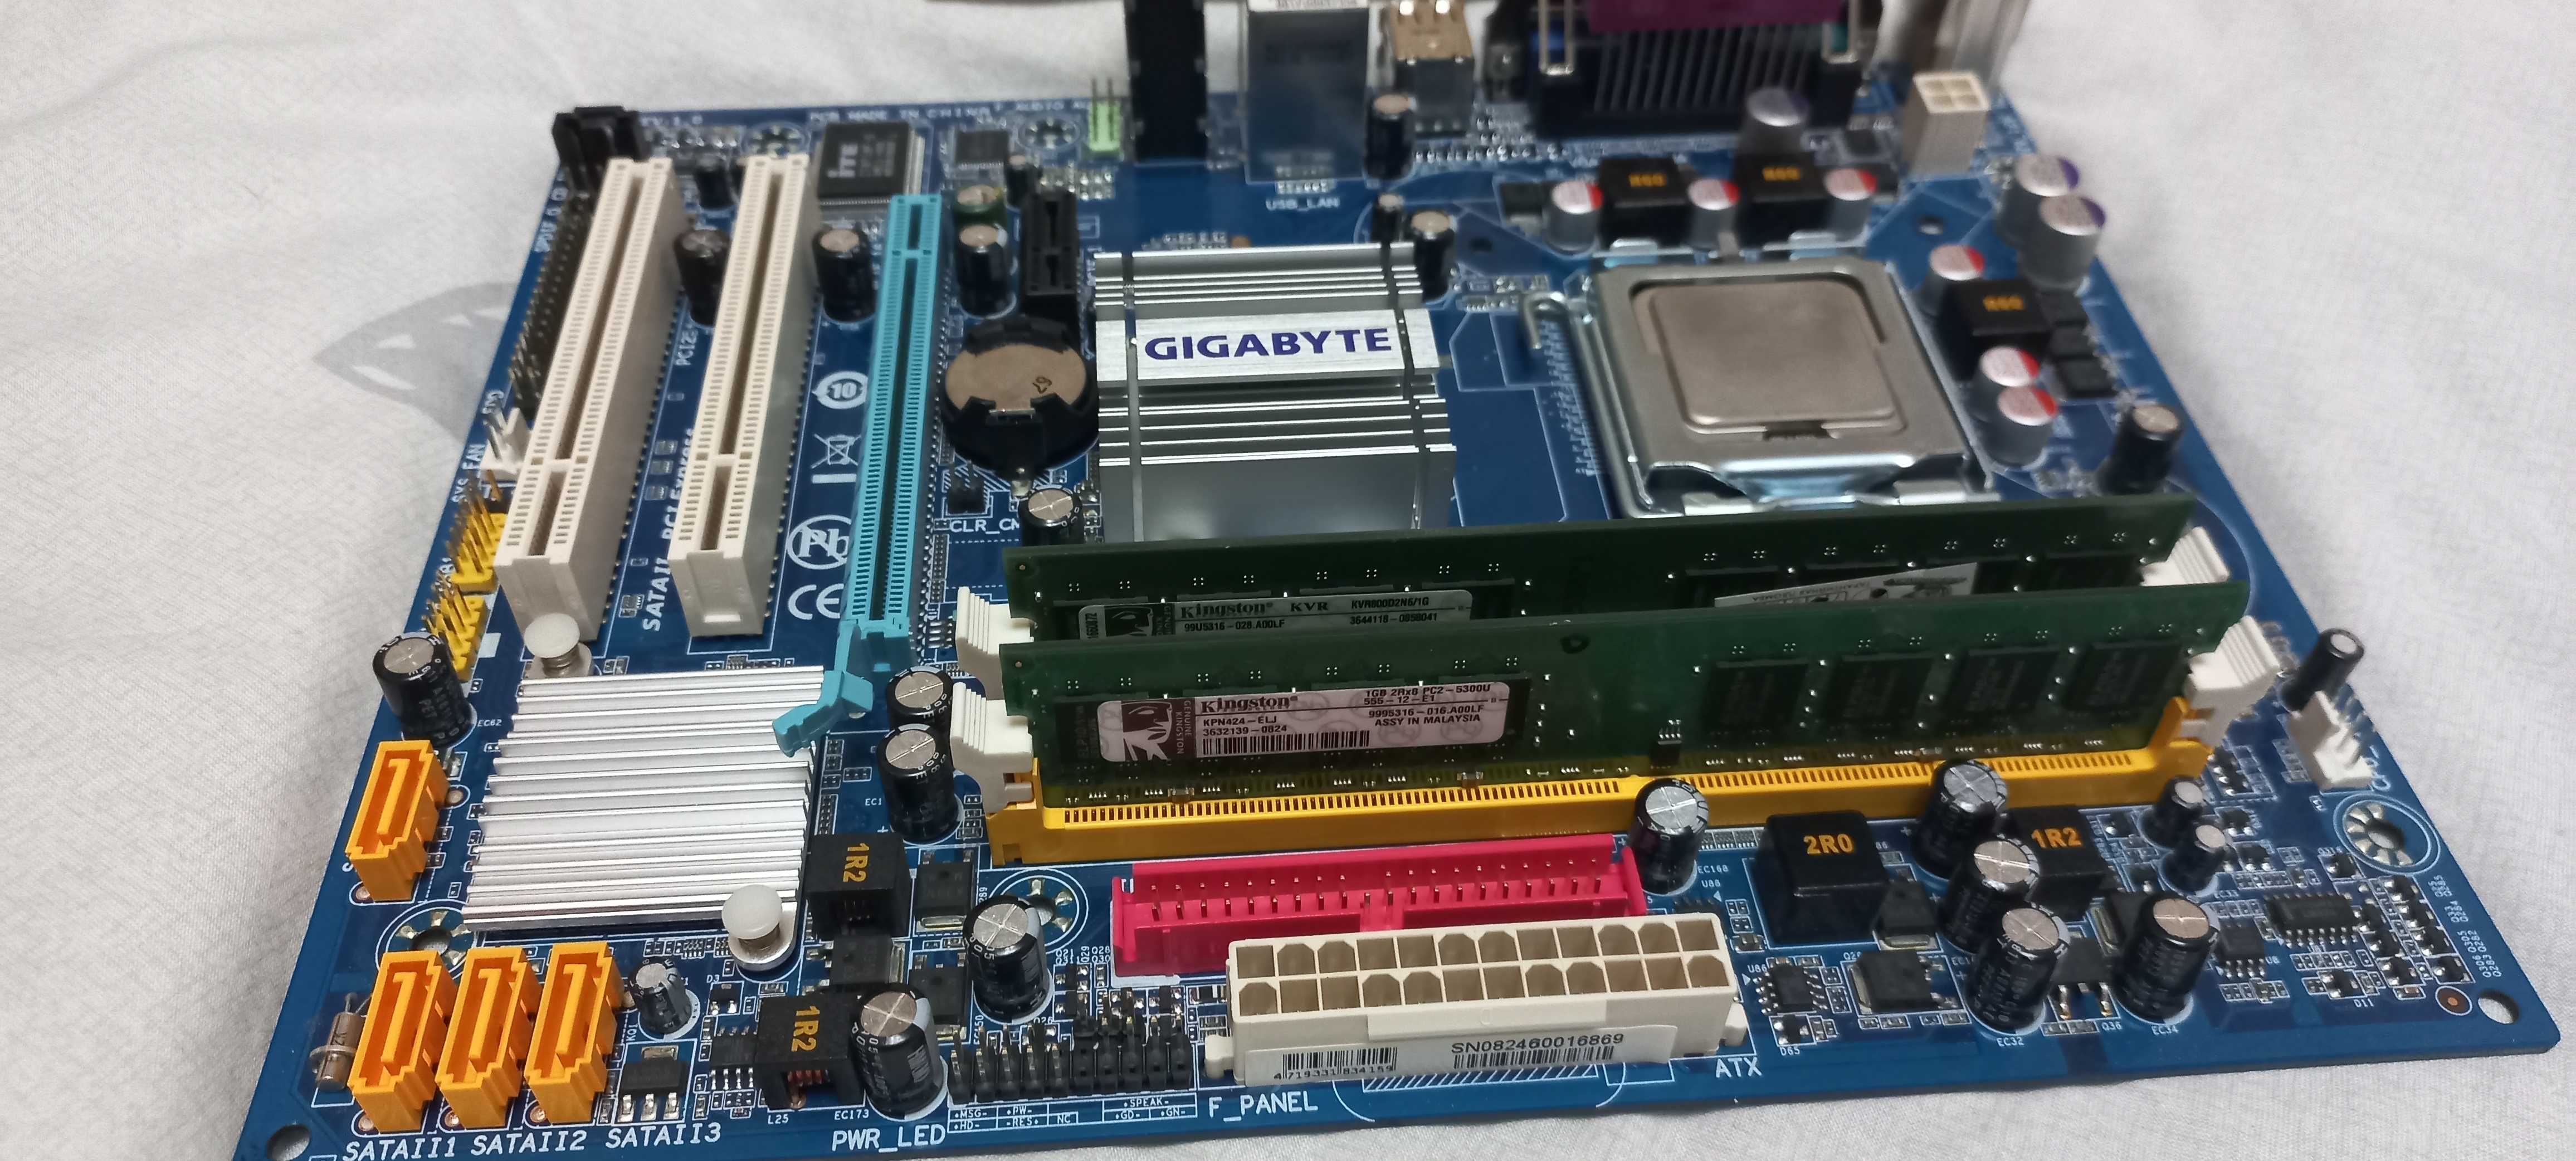 Gigabyte GA-G31M-S2L + C2Duo E4600 + 2Gb DDR2